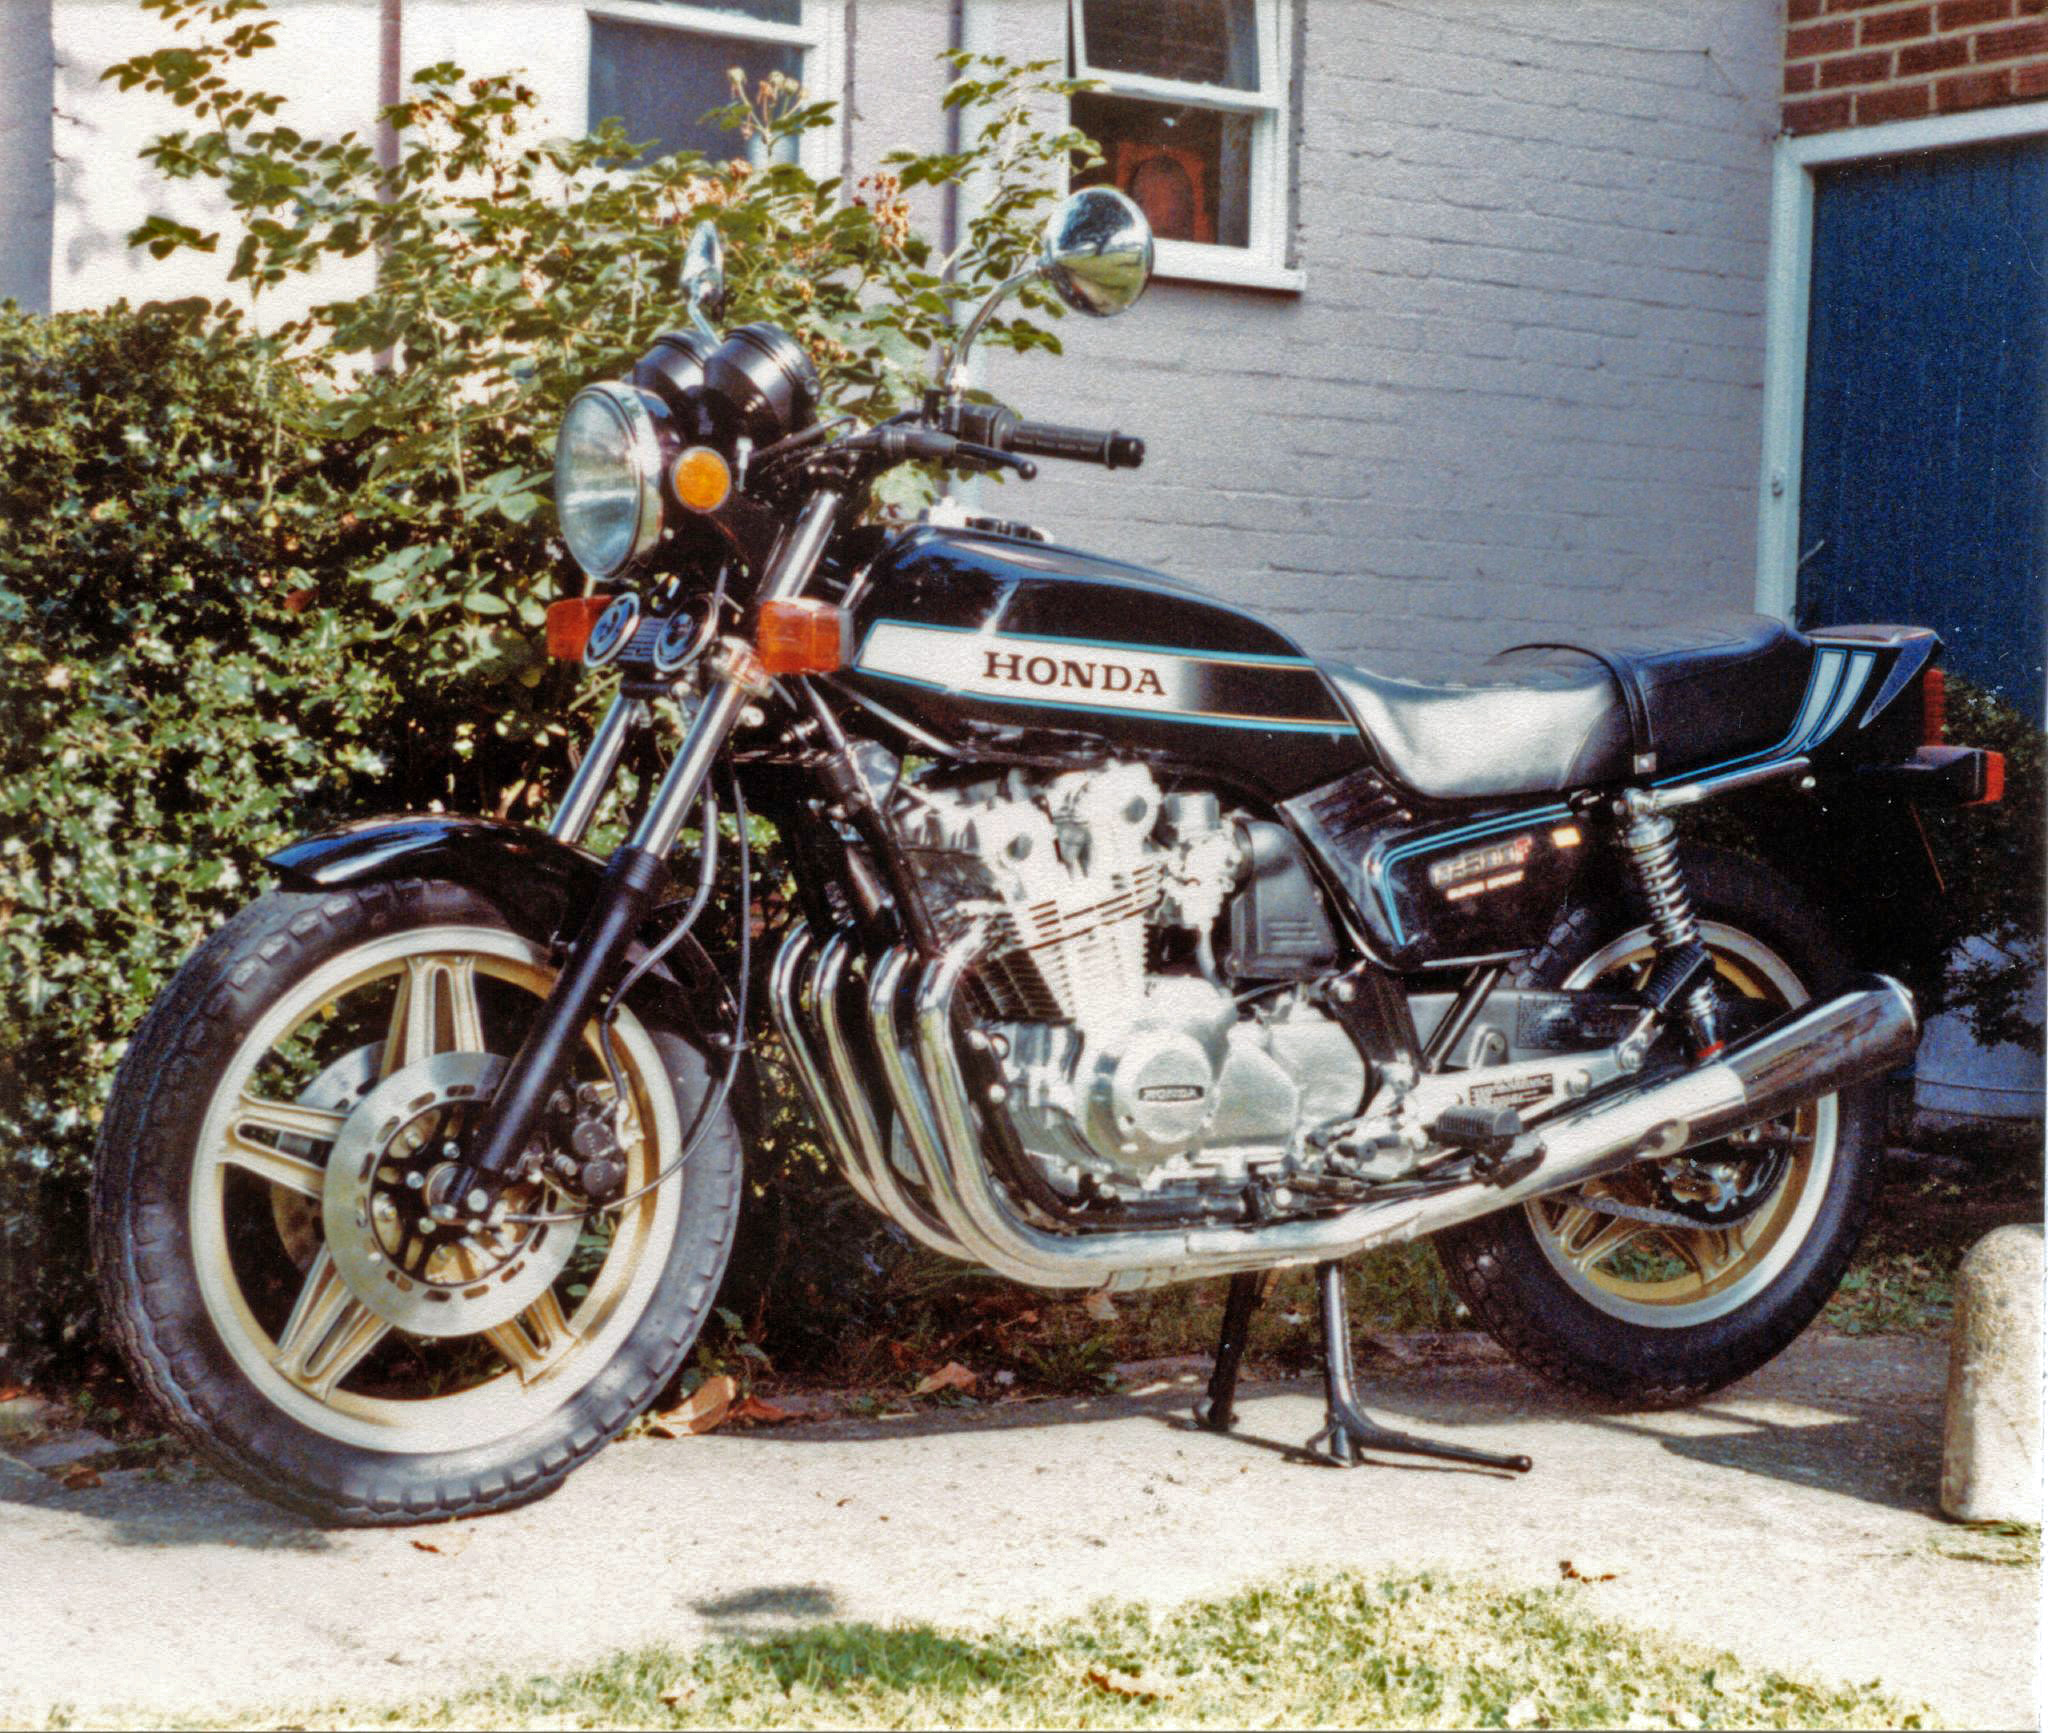 Honda CB 900 F 2 Bol d`Or 1983 photo - 1